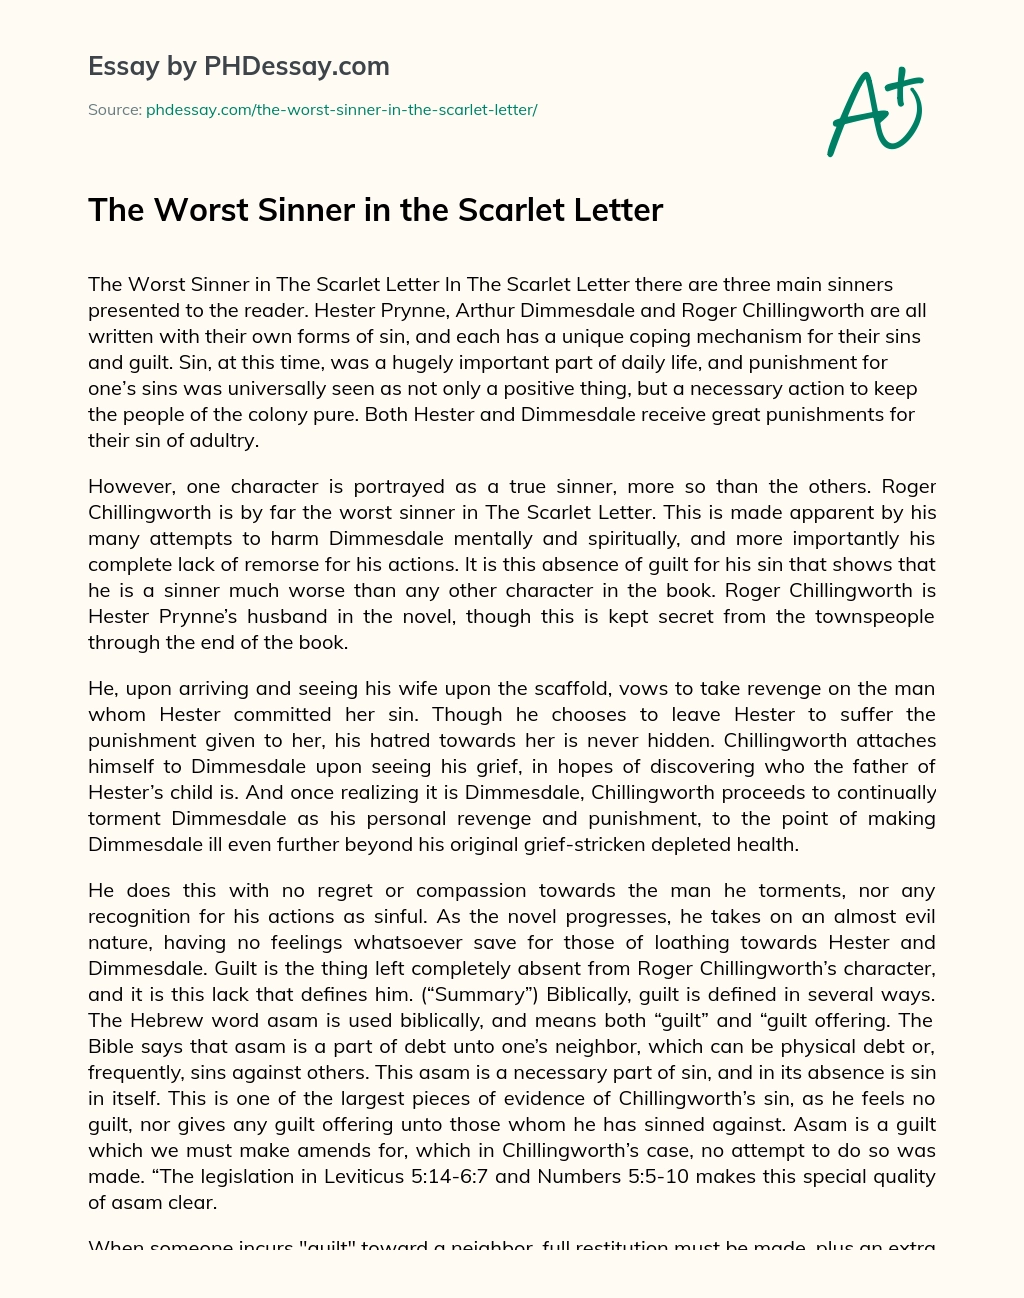 The Worst Sinner in the Scarlet Letter essay